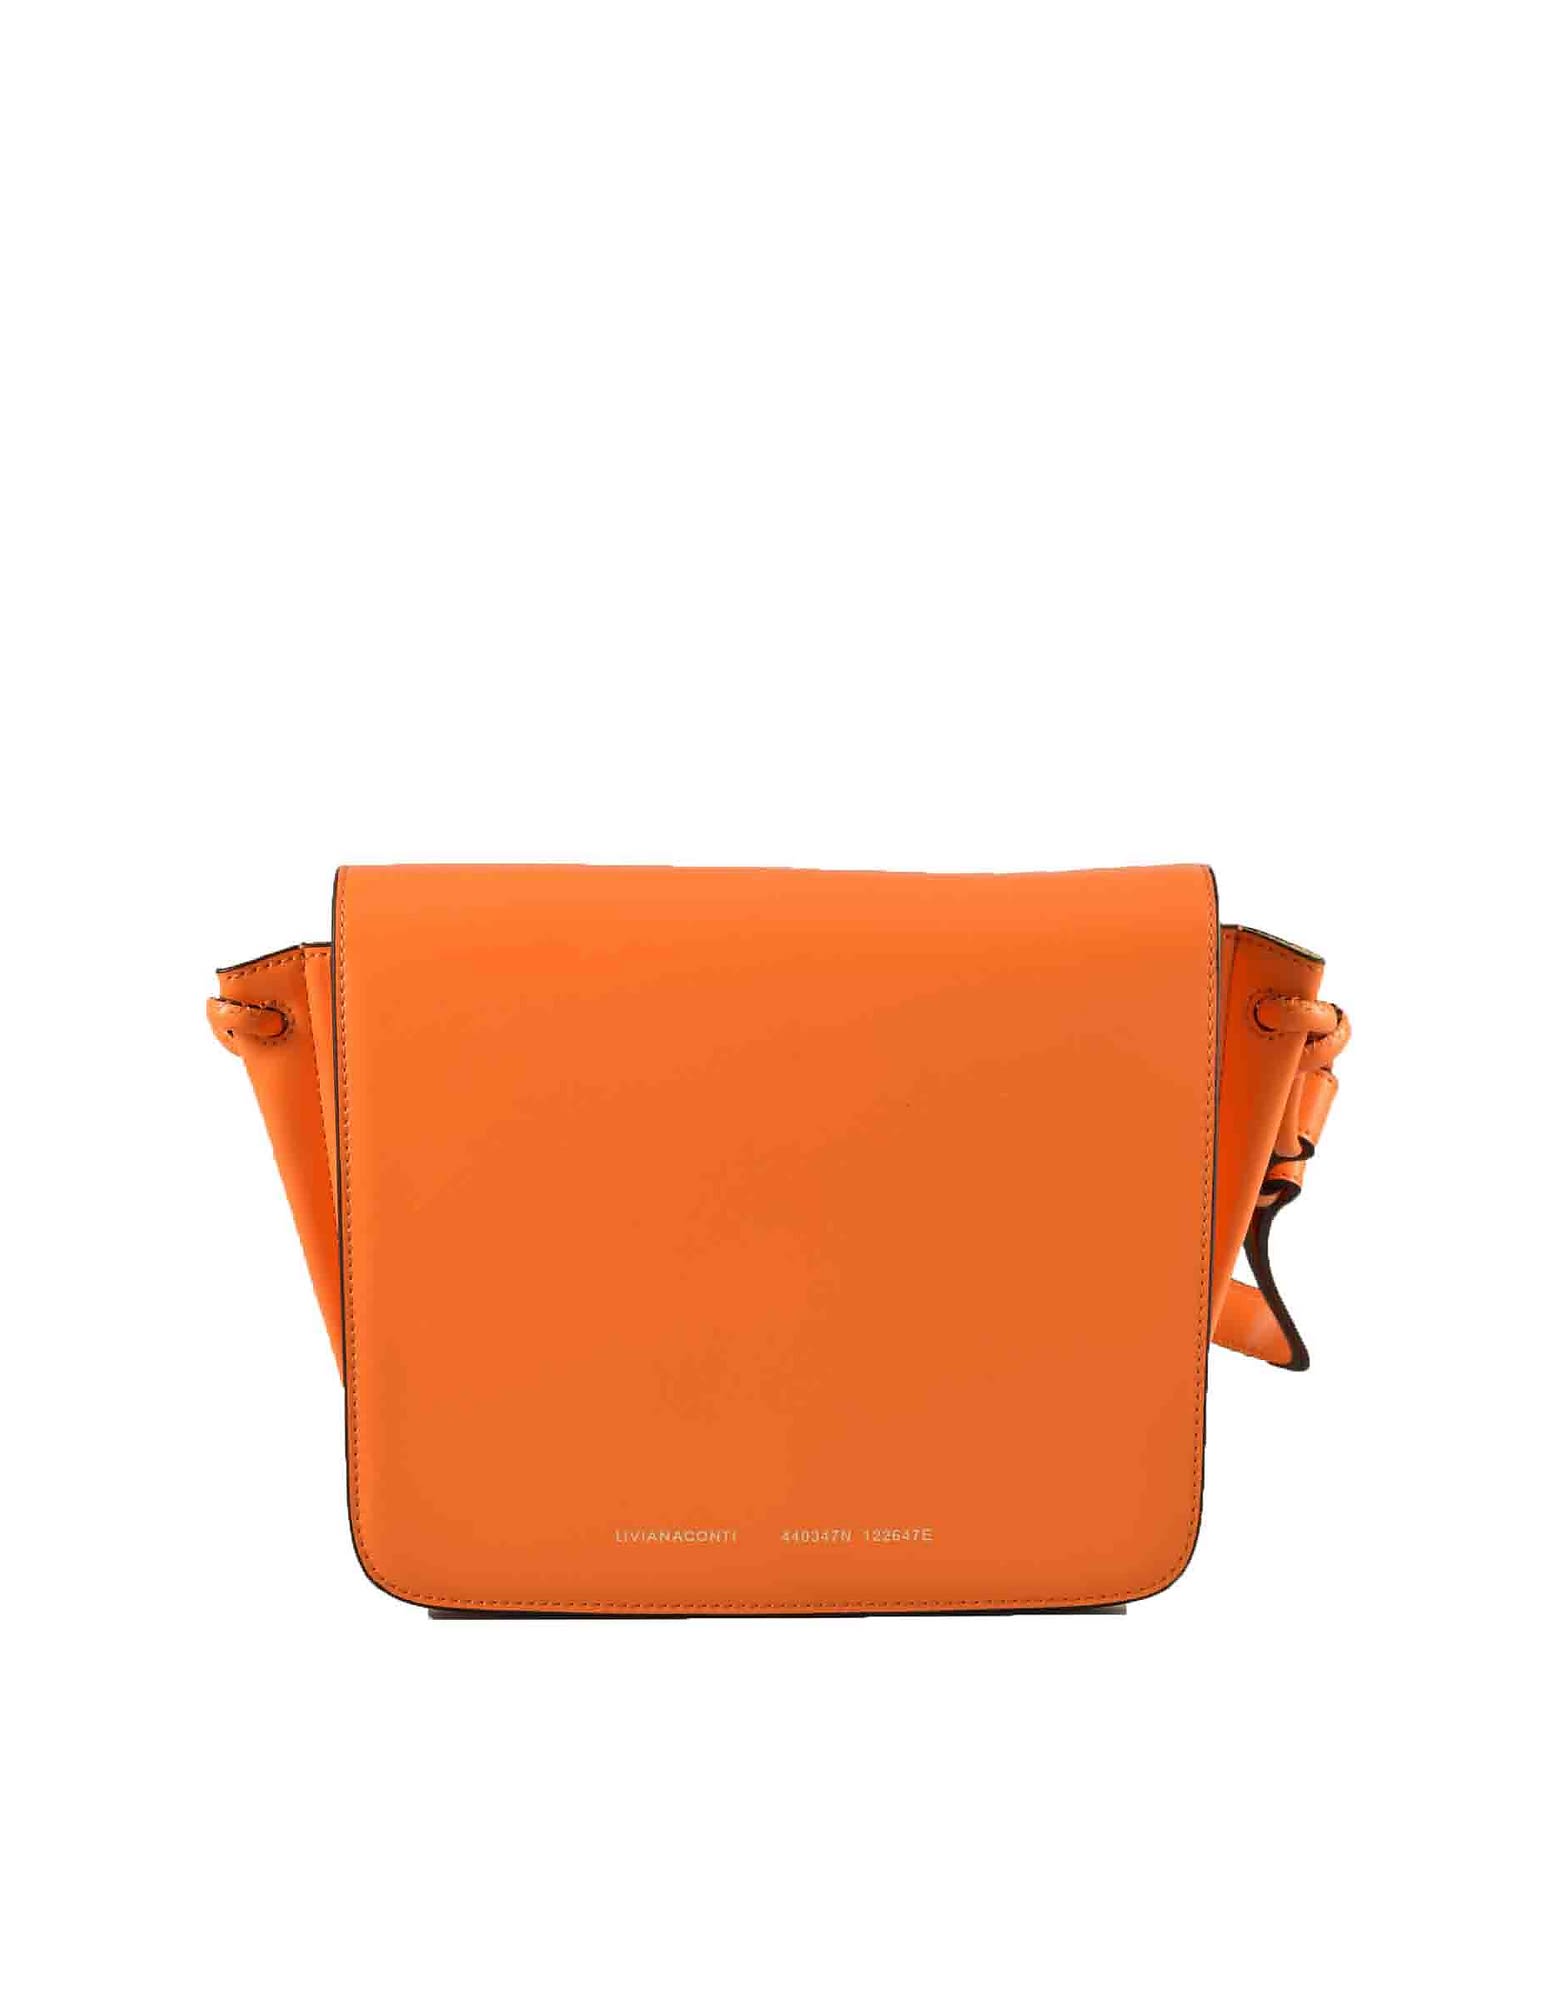 Liviana Conti Womens Orange Handbag